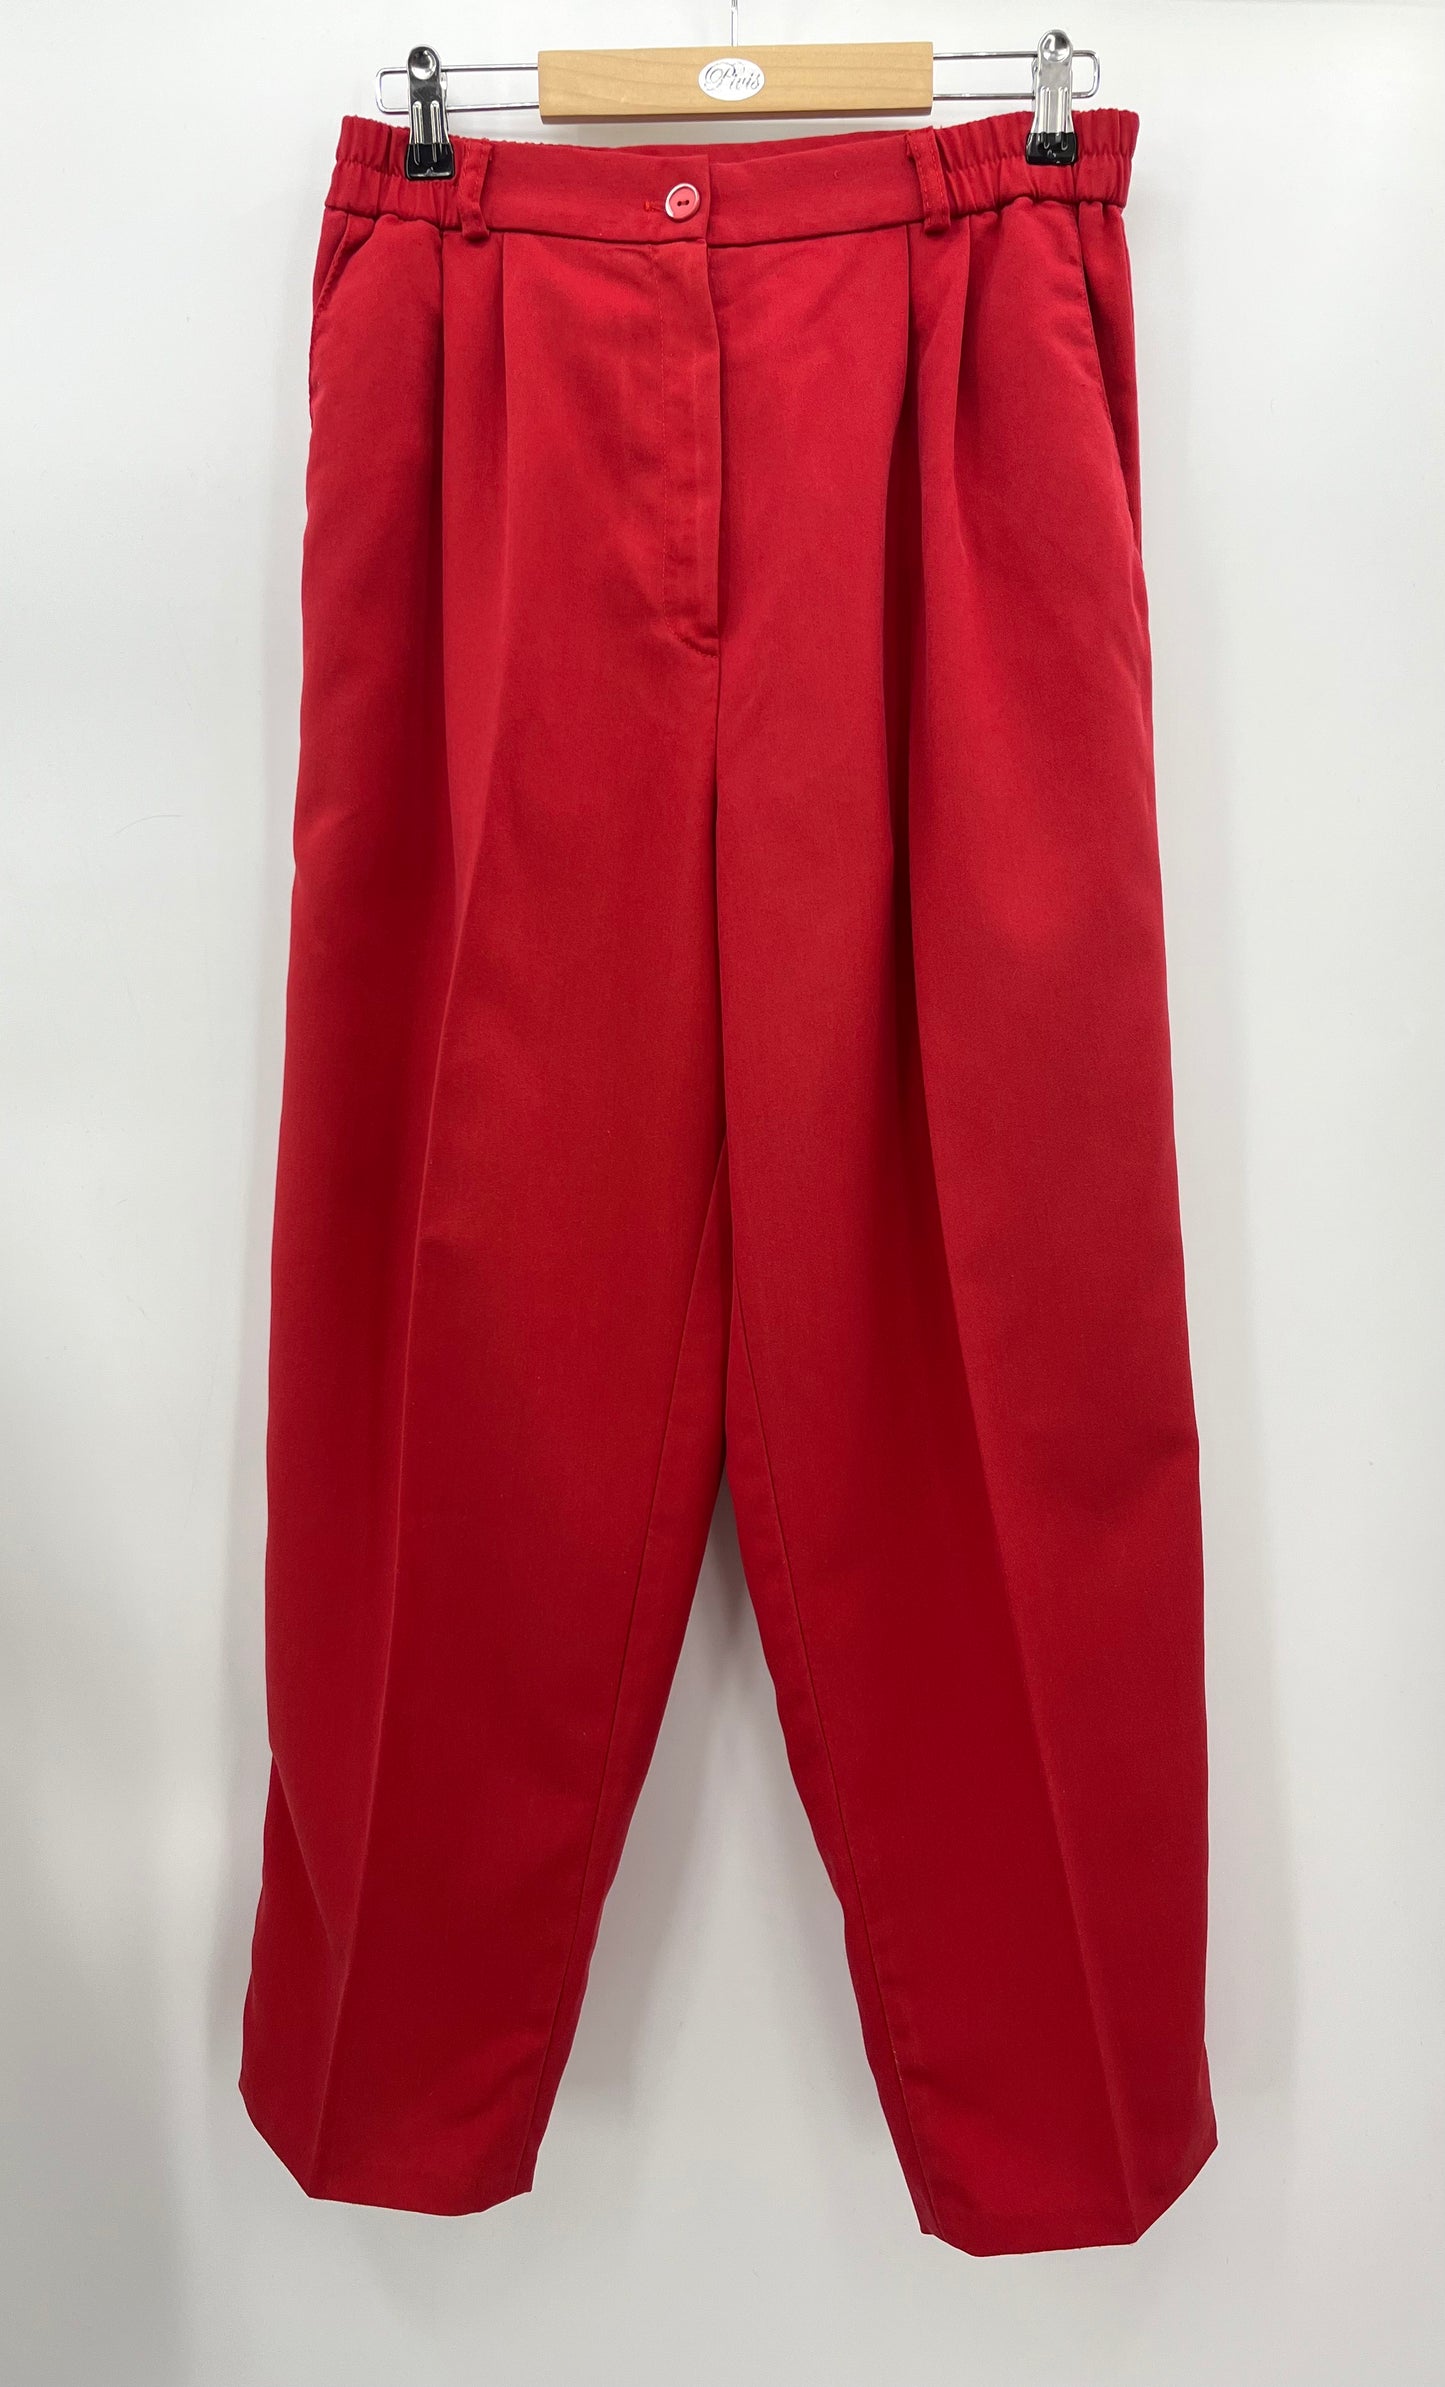 Sensations, punaiset housut, 90-luku, vyöt.ymp. 74-80cm, koko 38-40